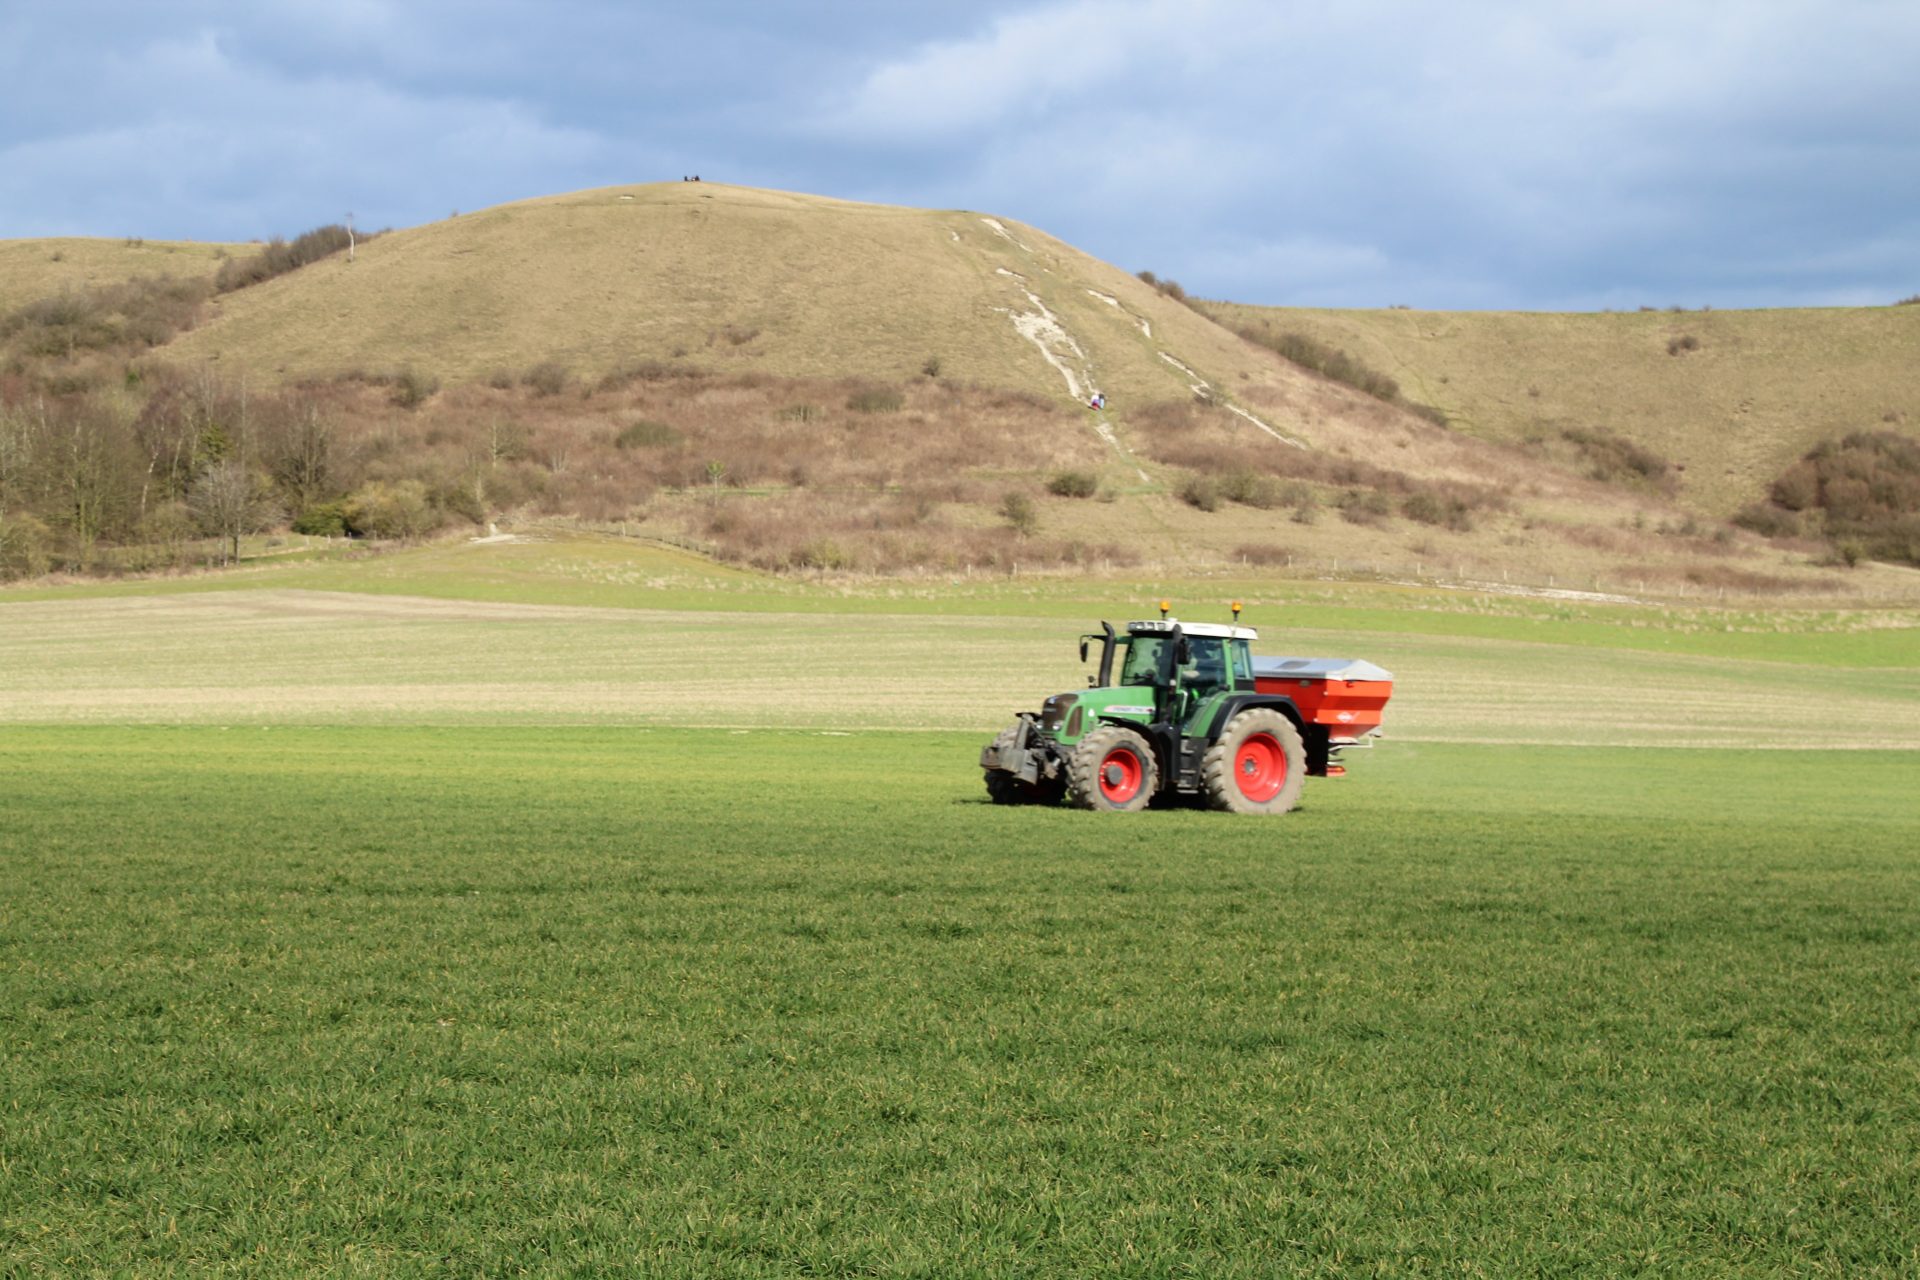 Tractor driving across field spraying fertiliser